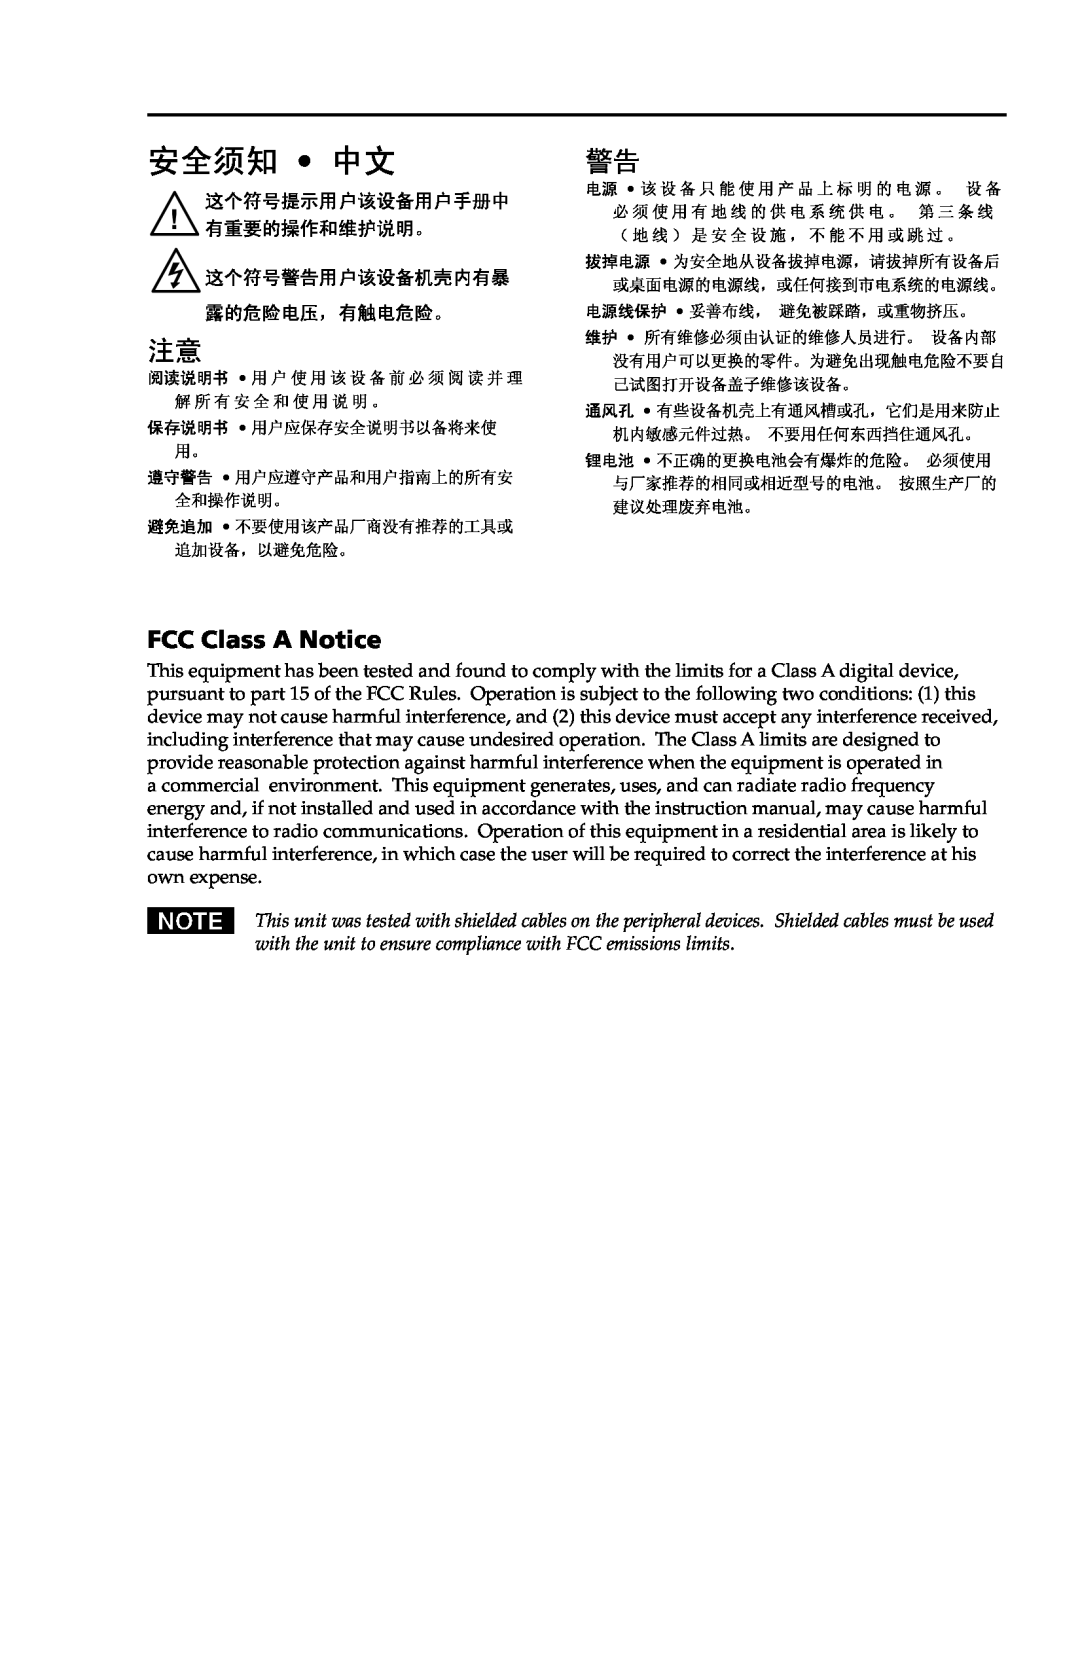 Extron electronic MMX 42, MMX 62 user manual FCC Class A Notice, 安全须知 中文 